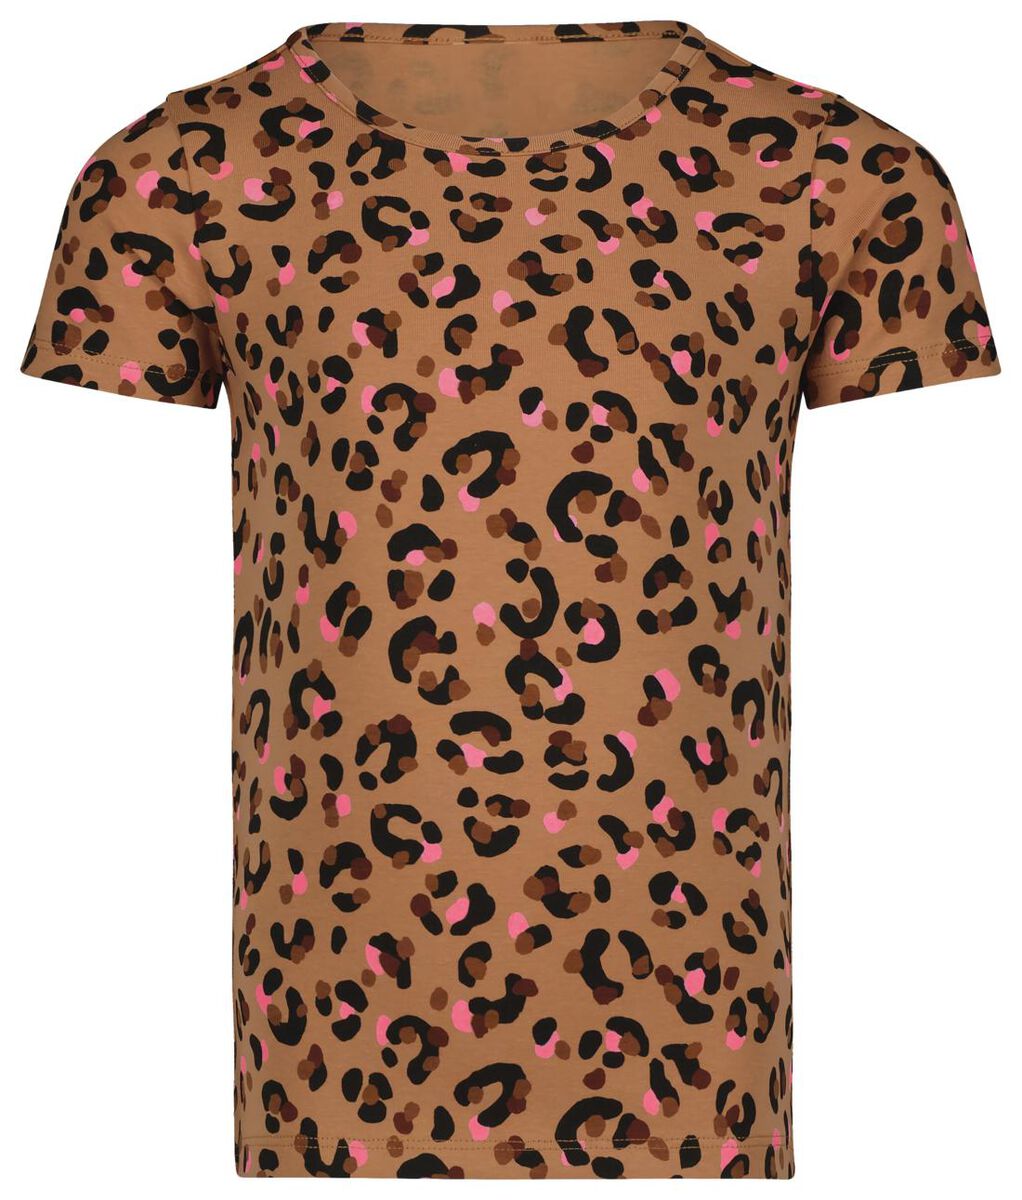 kinder t-shirt animal bruin bruin - 1000027920 - HEMA